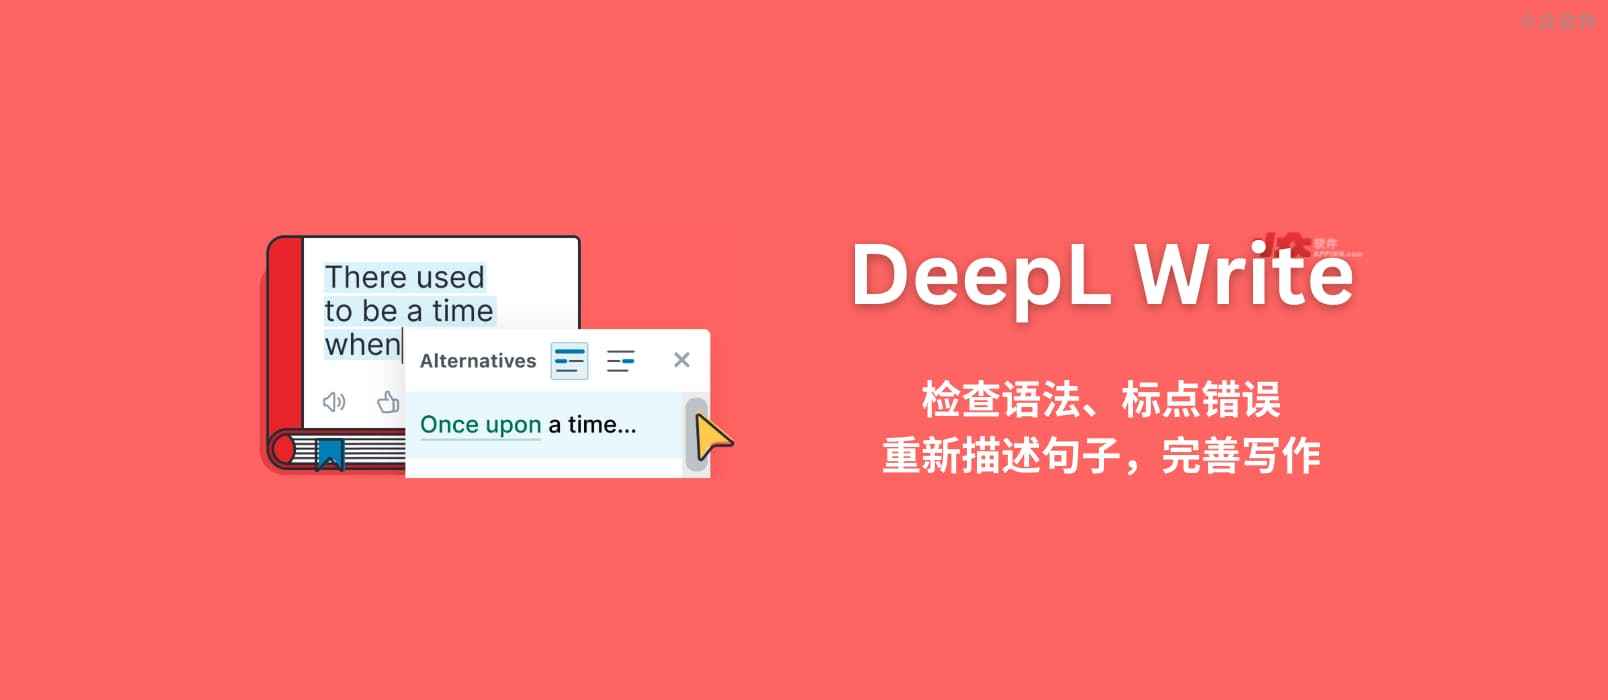 DeepL Write 发布，检查语法、标点错误，重新描述句子，完善写作。